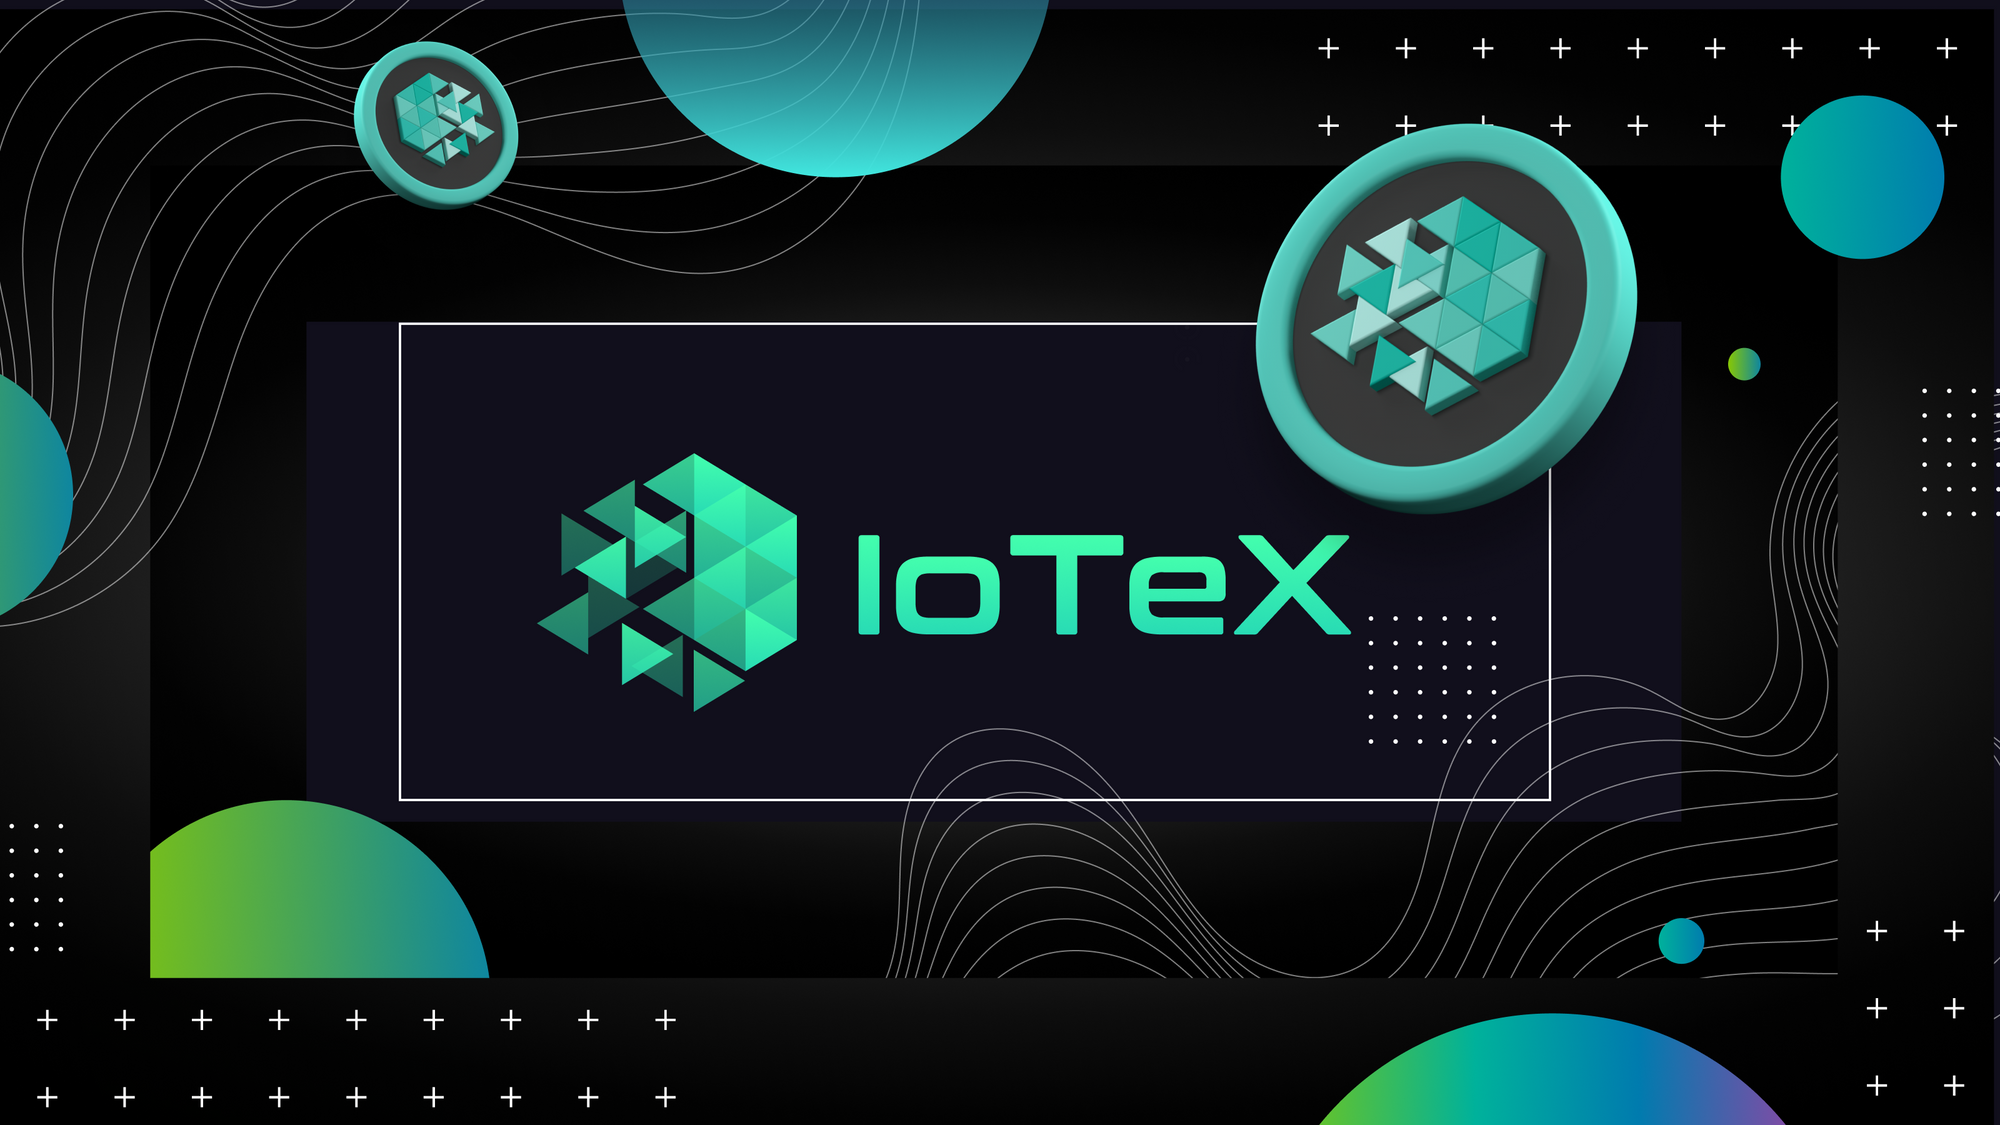 IoTeX logo for IoTeX Explained